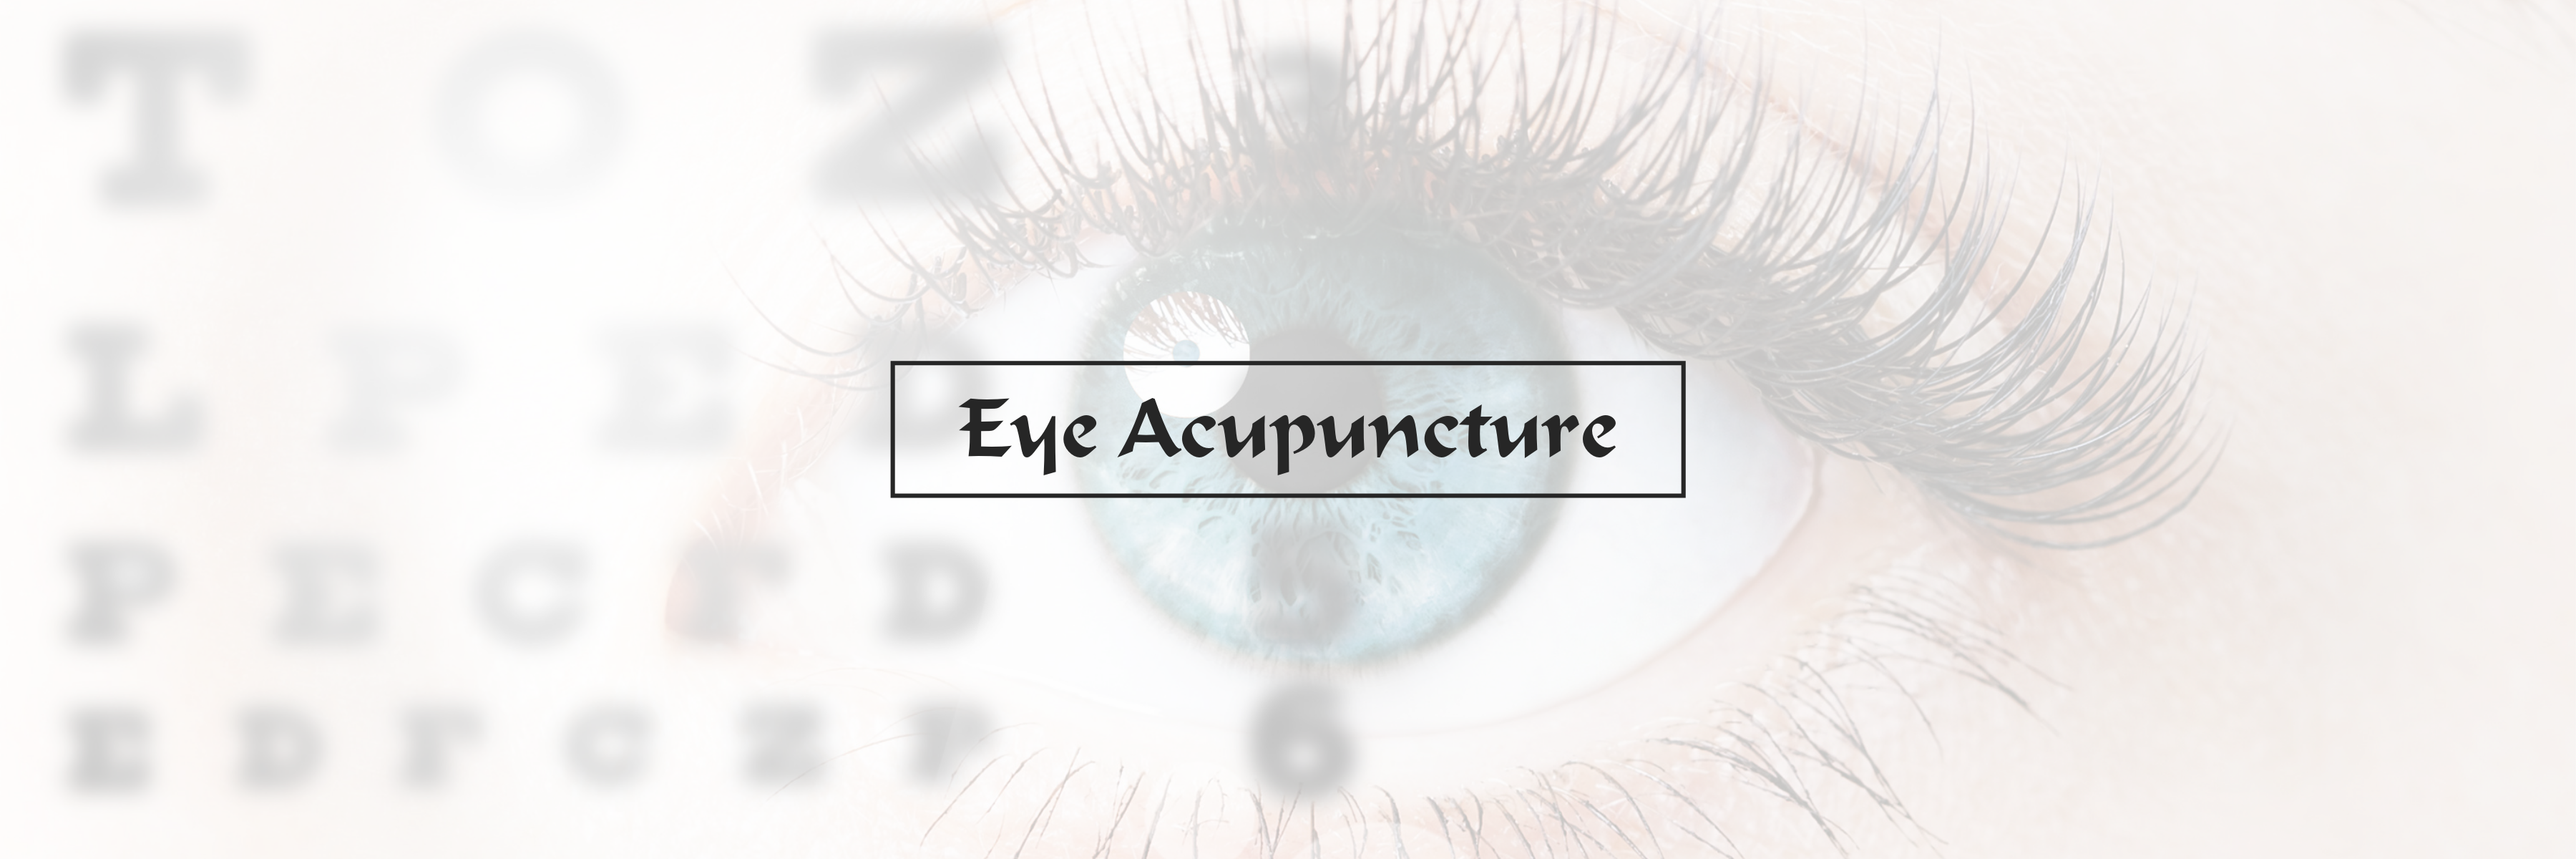 Eye Acupuncture Nature S Balance